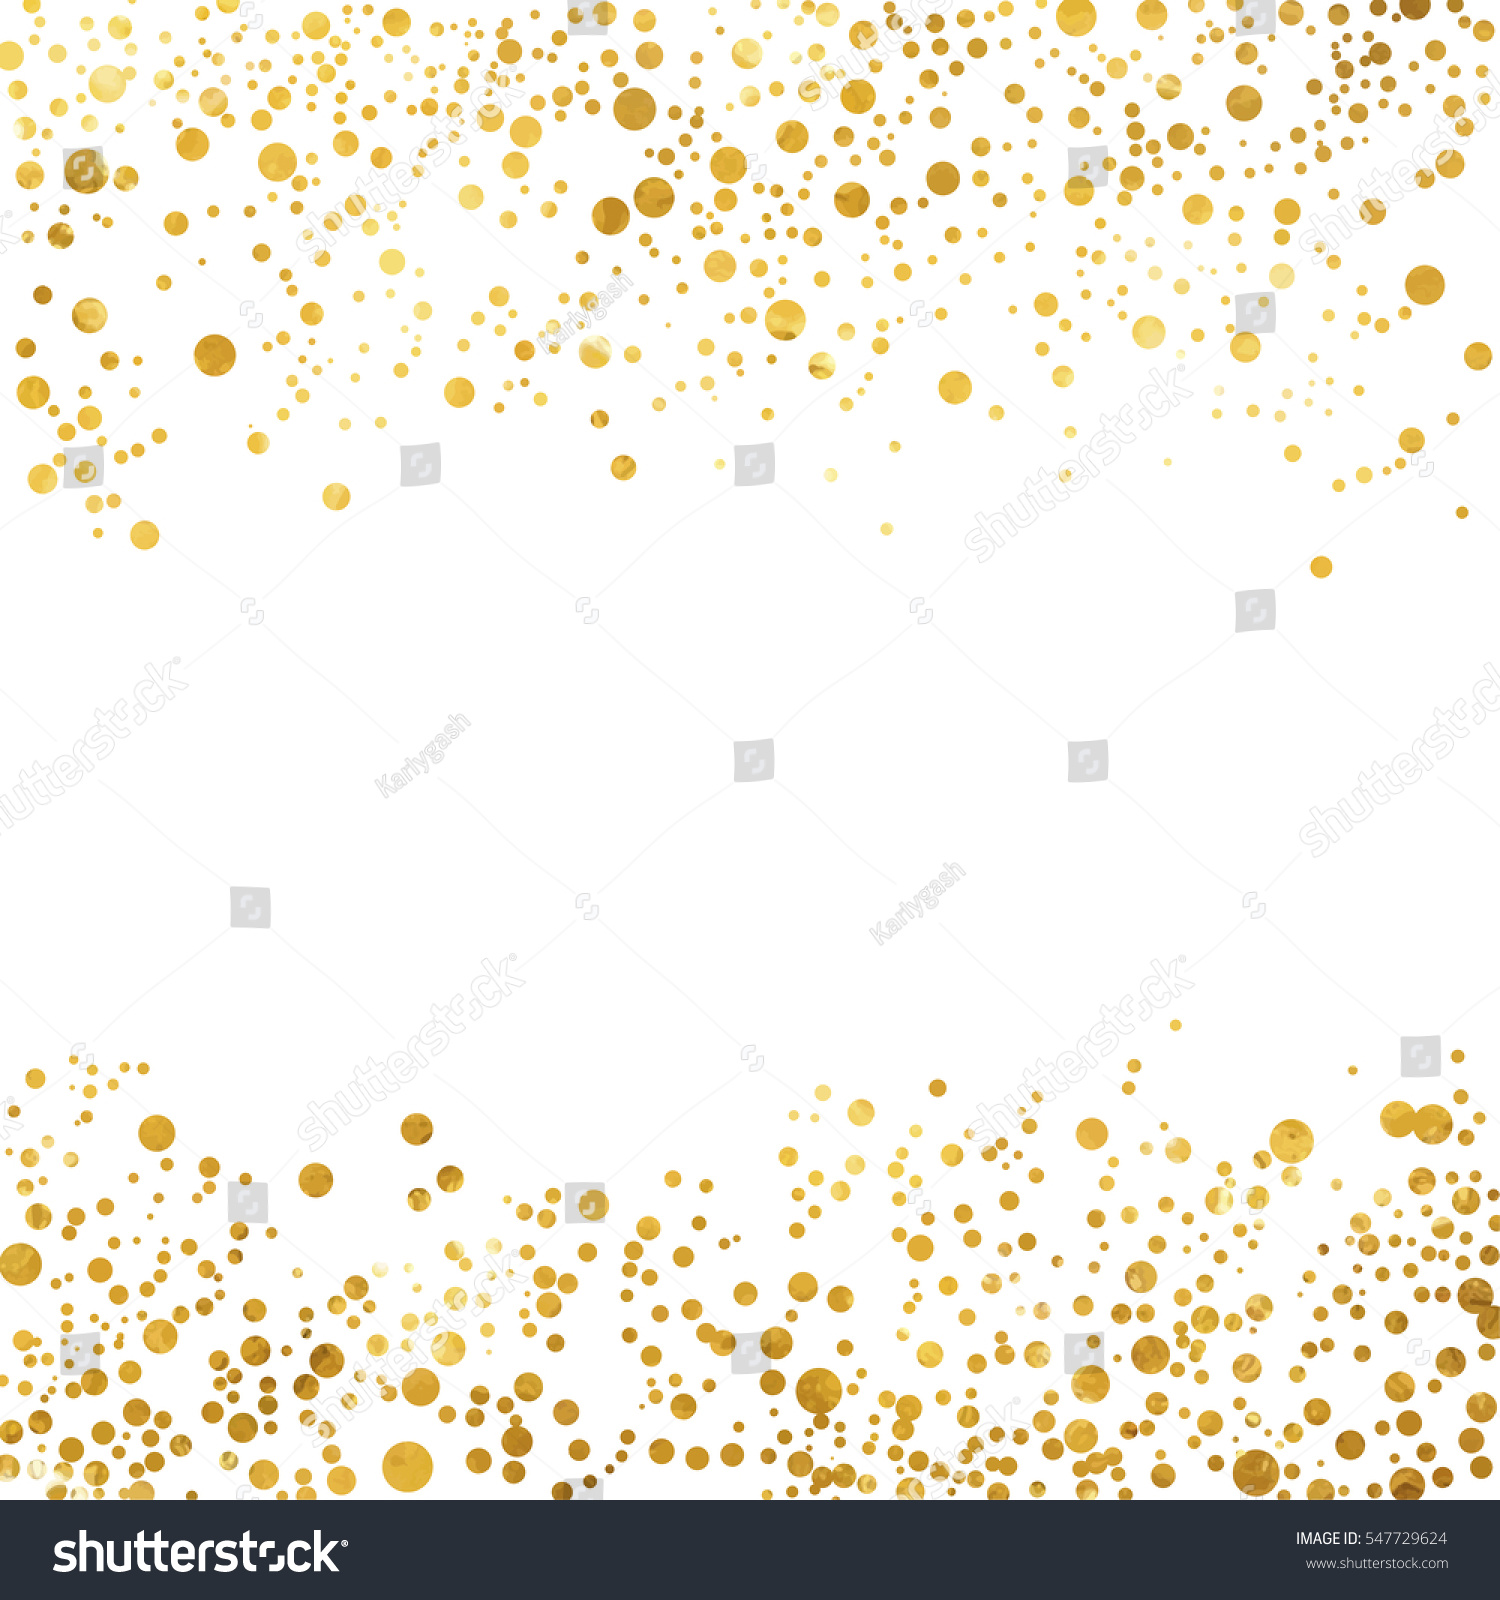 Gold Glitter Polka Dot Wallpaper